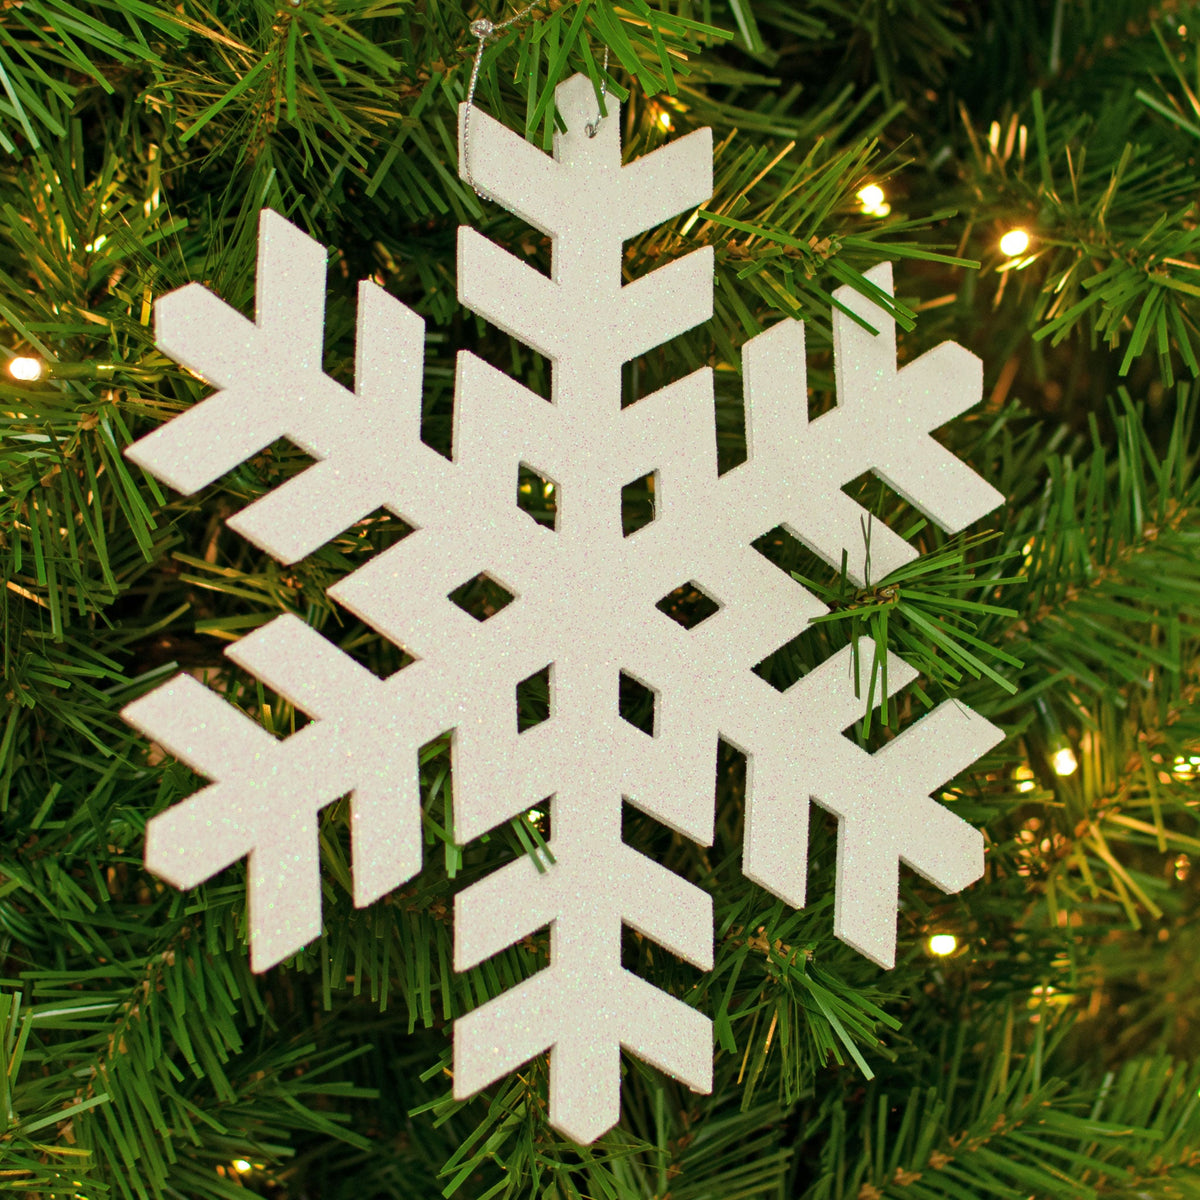 Leesgel 3 Colors Confetti for Packaging, Christmas Snowflake